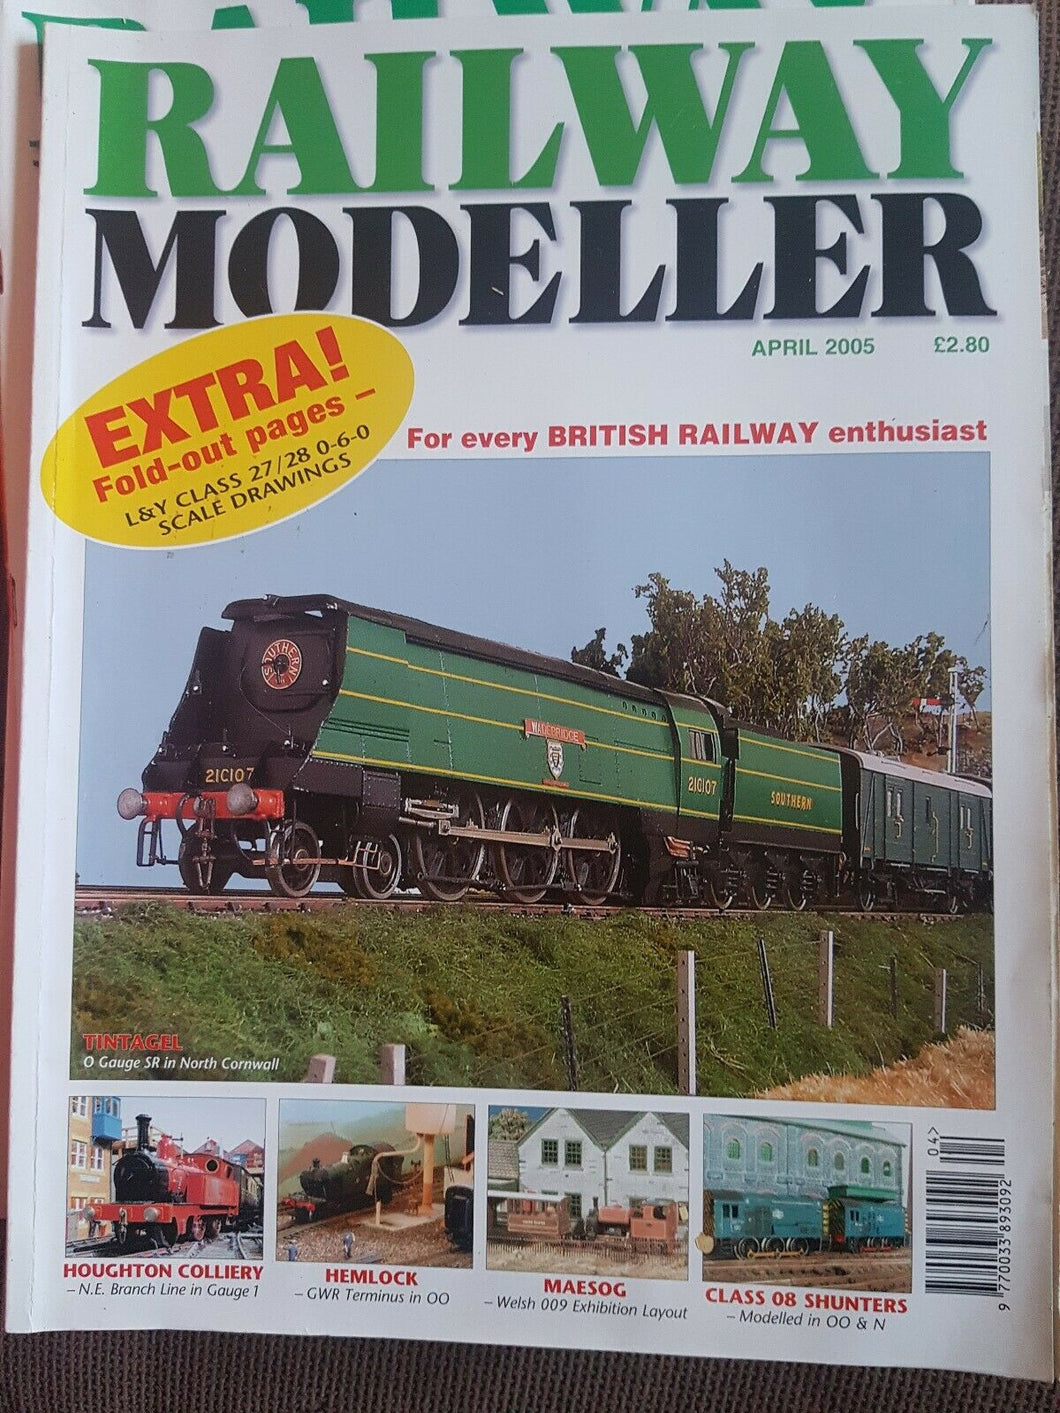 Railway modeller magazine April 2005